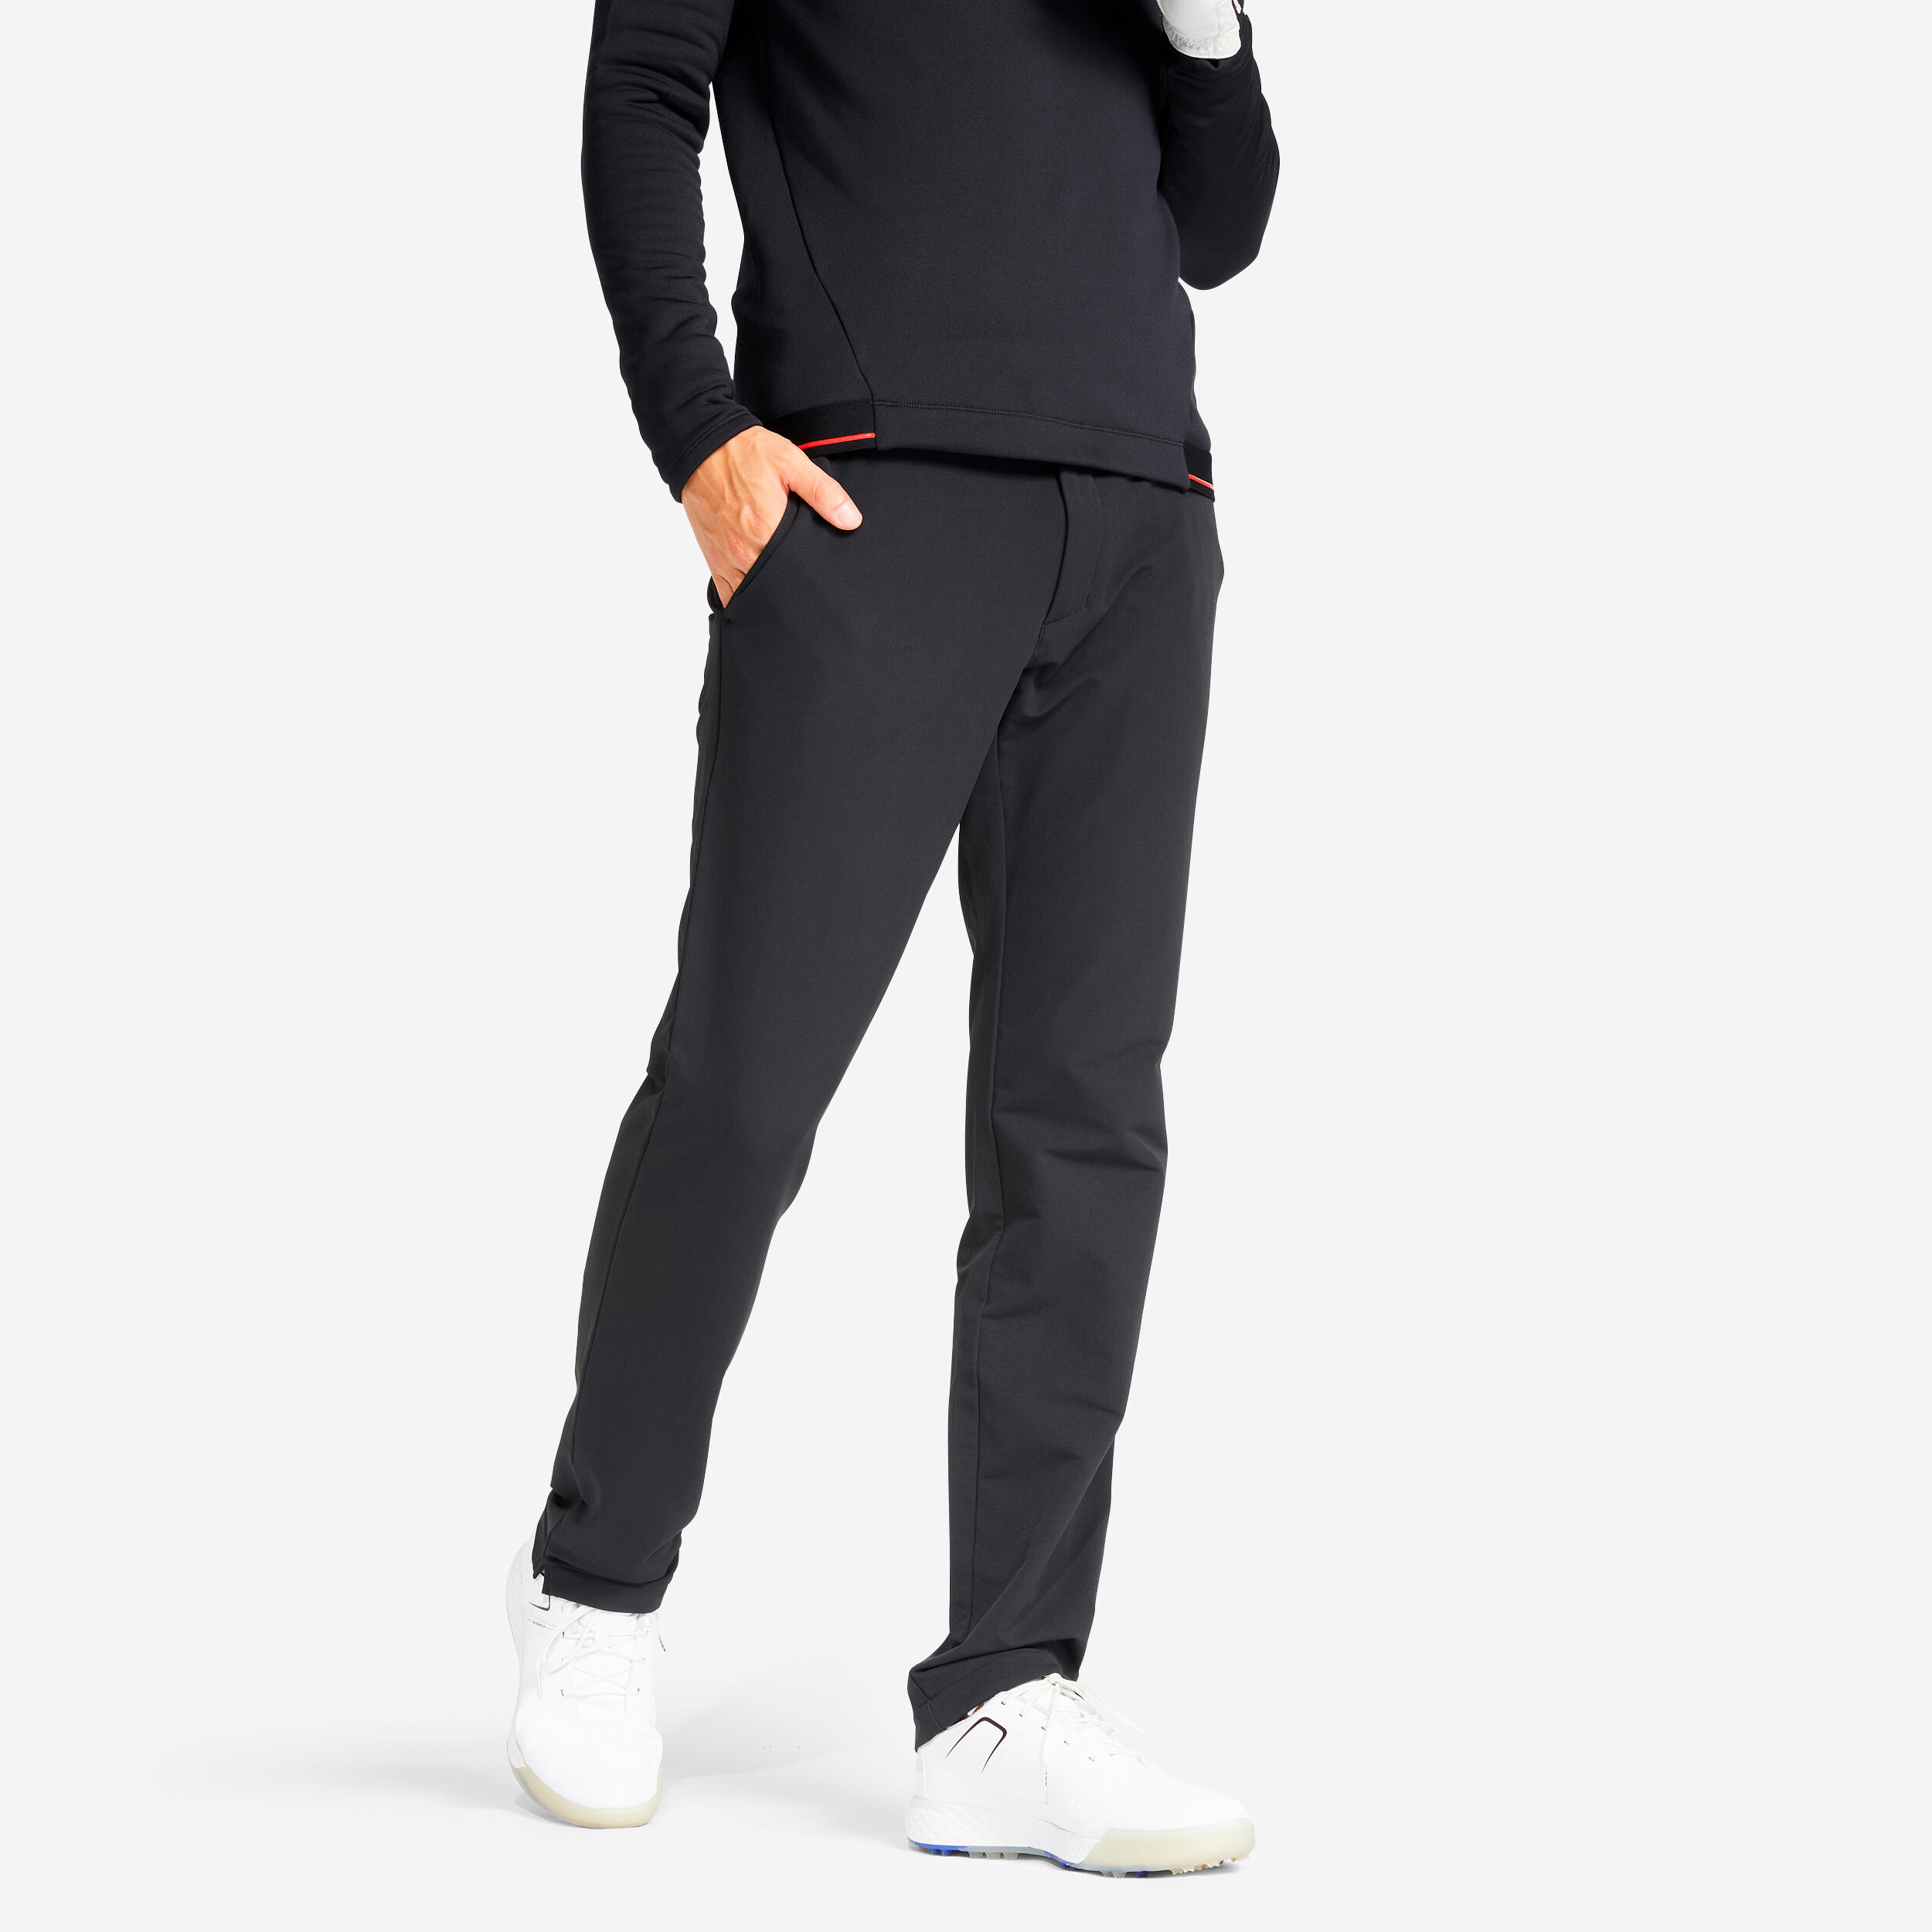 INESIS Men's Golf Winter Trousers - CW500 Black